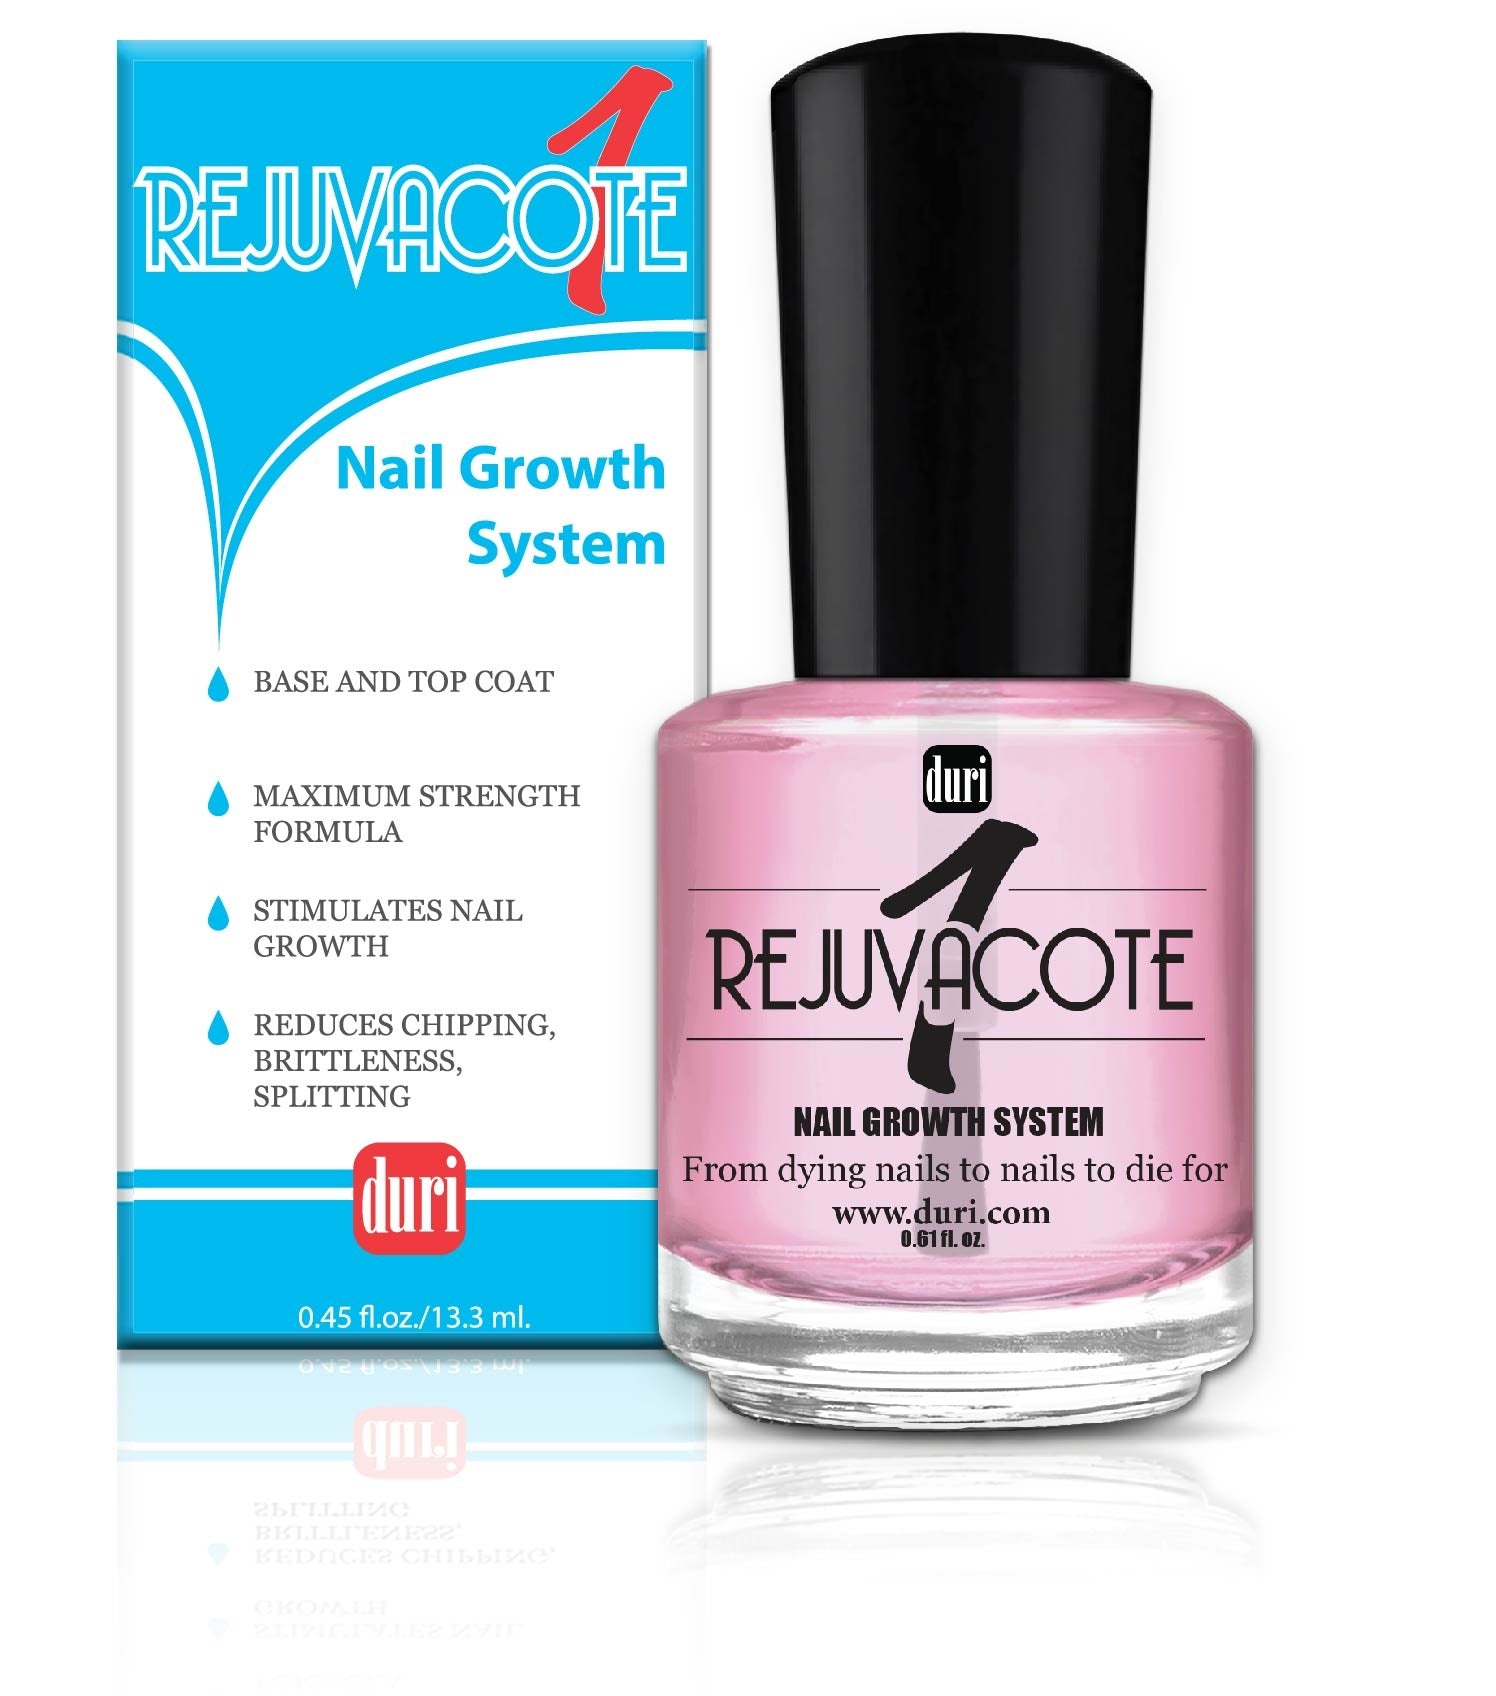 Rejuvacote 1 Original Maximum Strength Nail Growth System + Miracote Quick Dry Through Top Coat